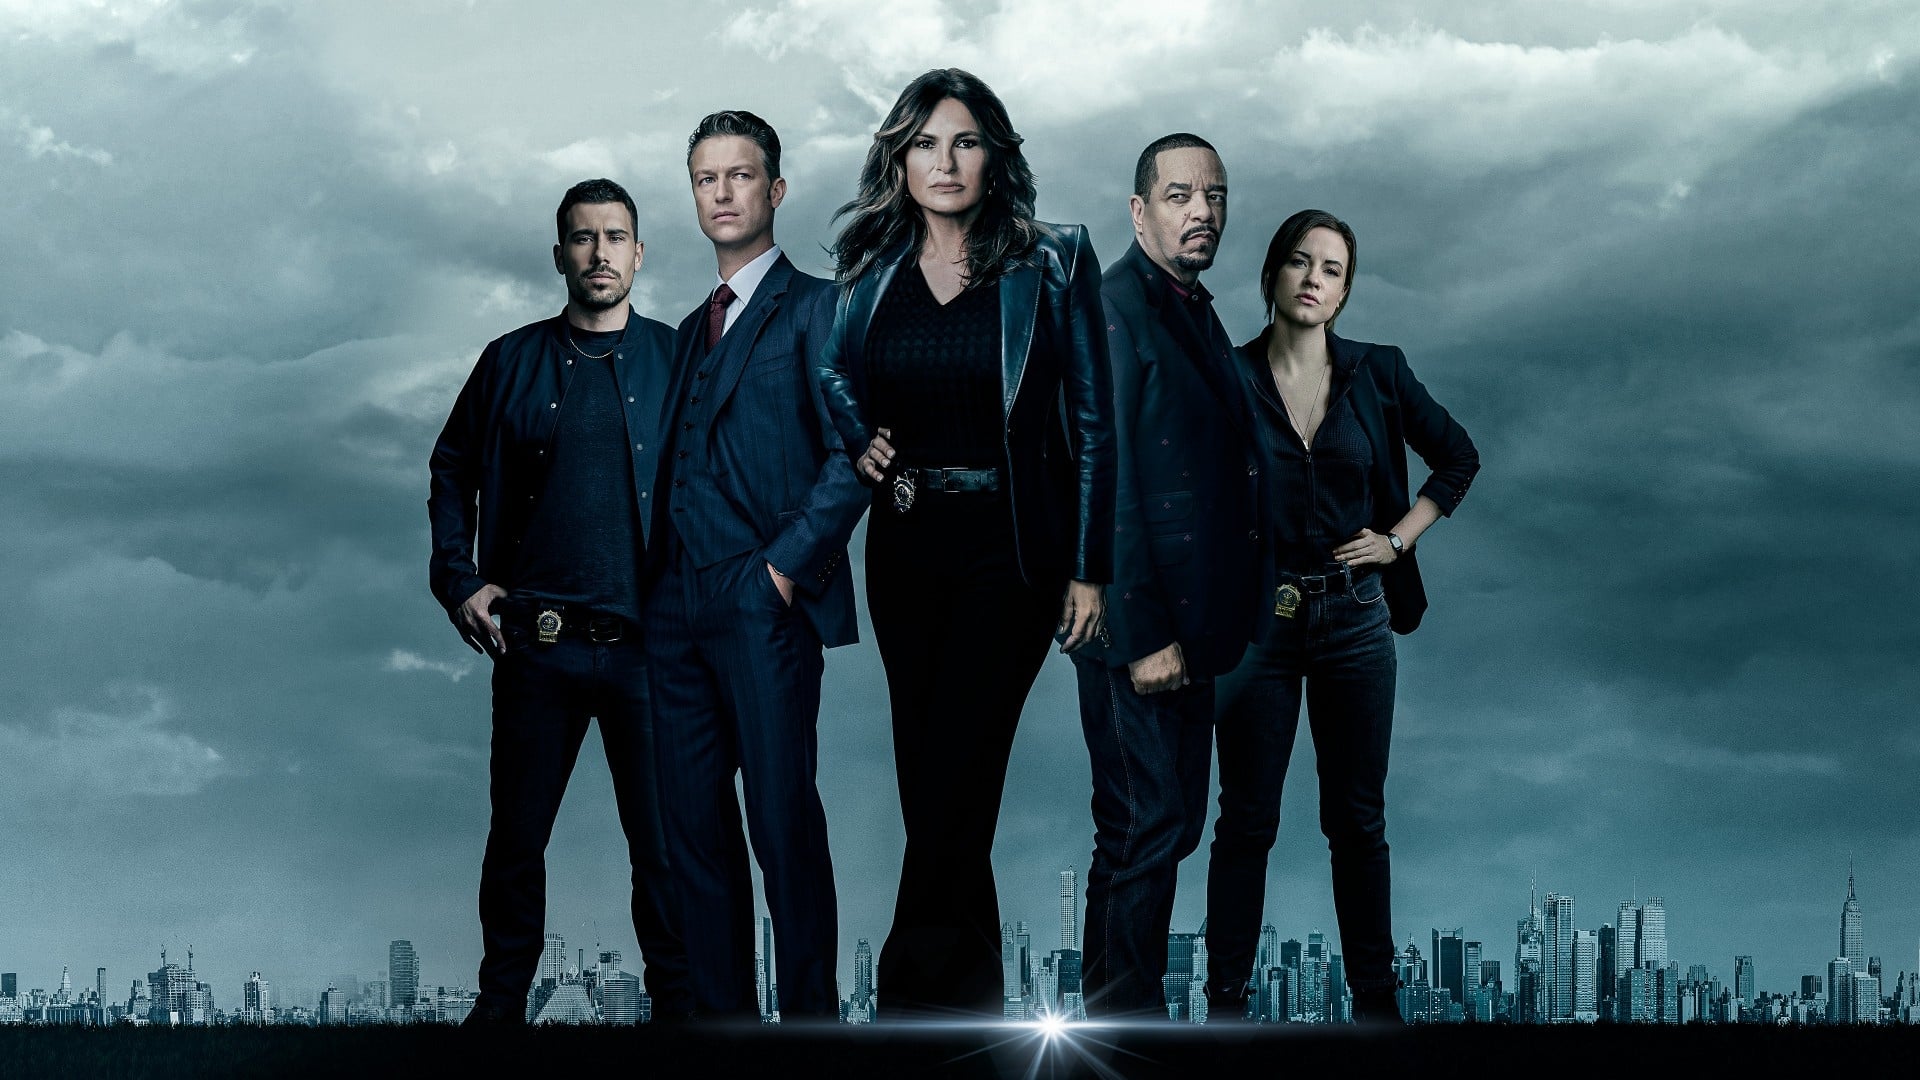 Law & Order: Special Victims Unit - Season 7 Episode 21